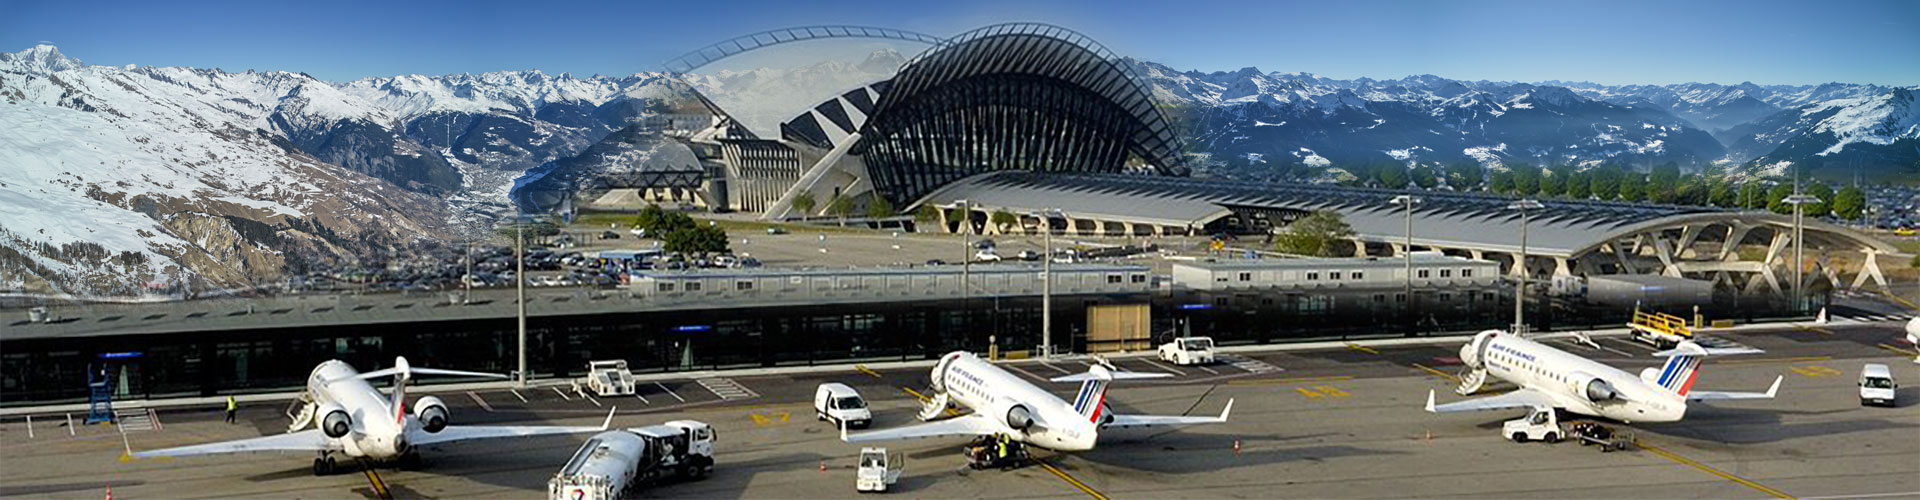 Taxi Lyon airport transfers to Tignes ski resort